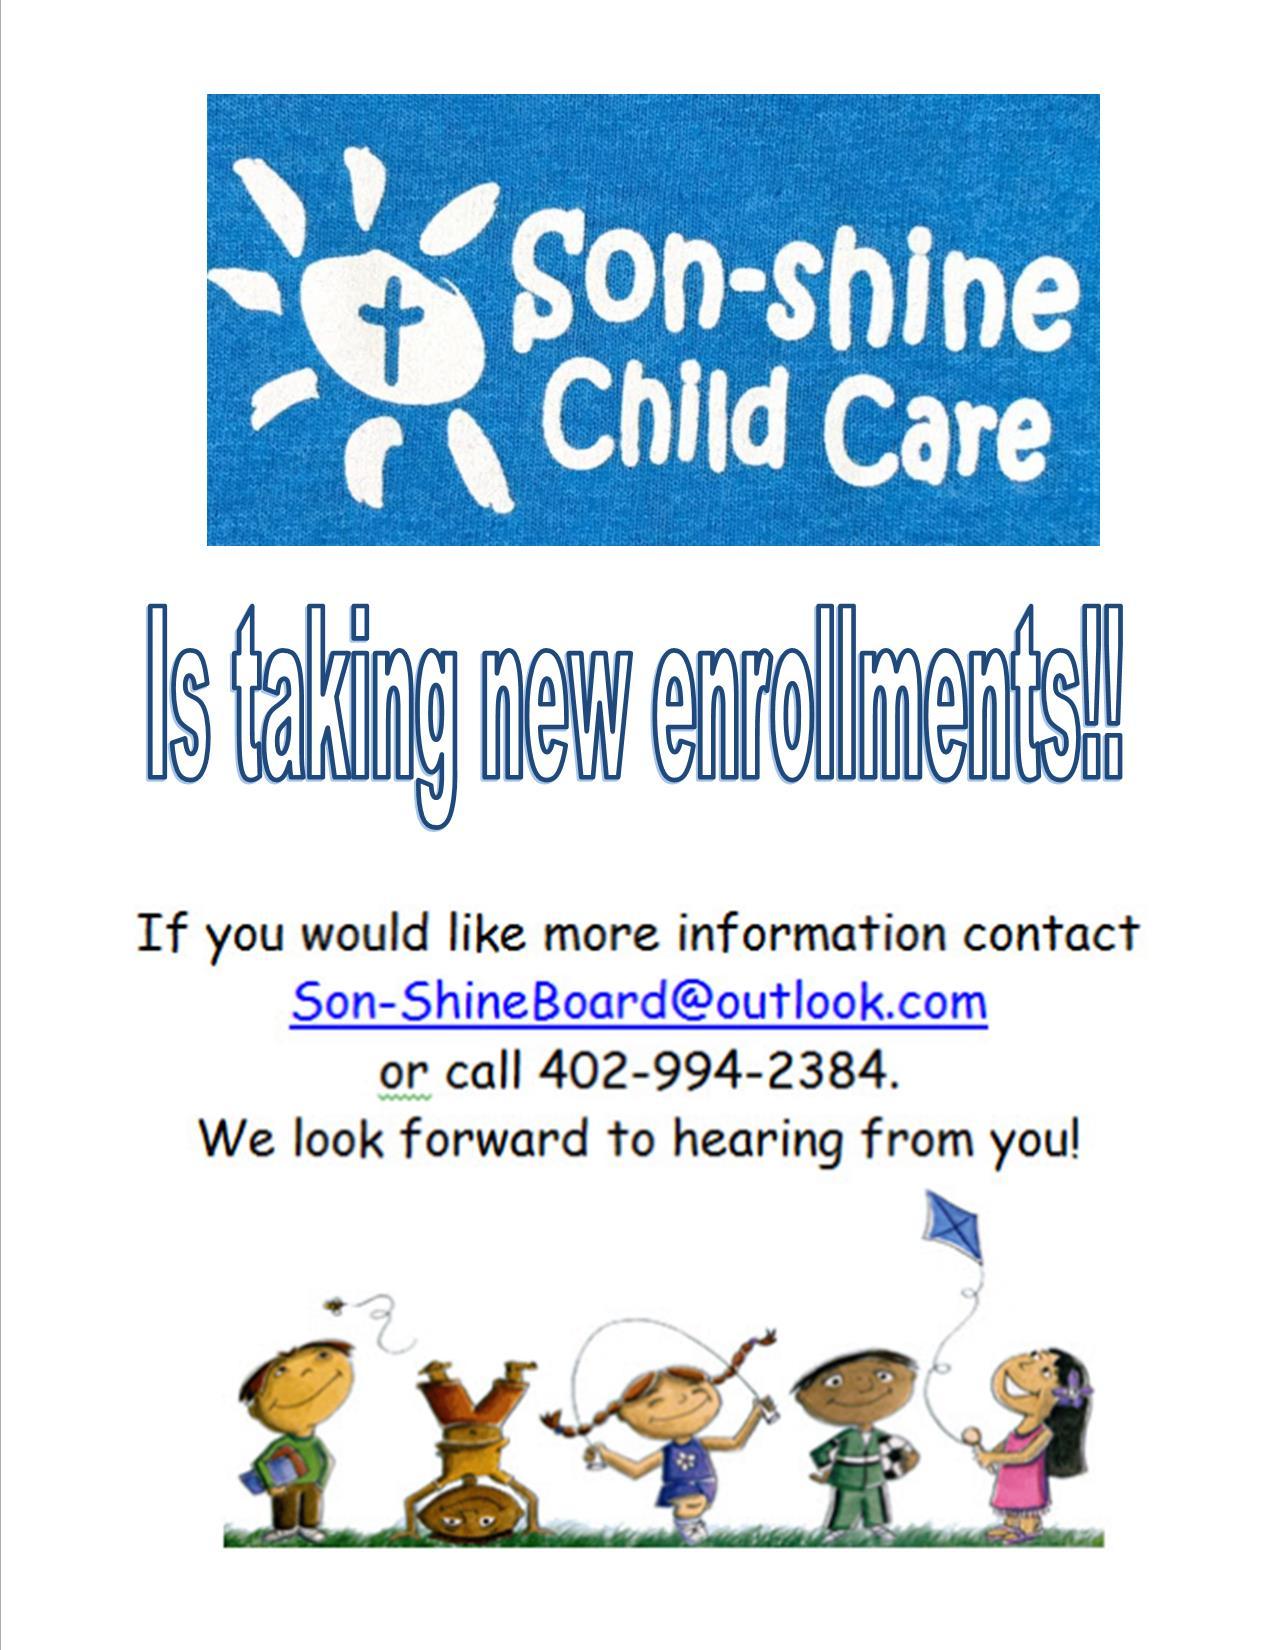 Sonshine child care